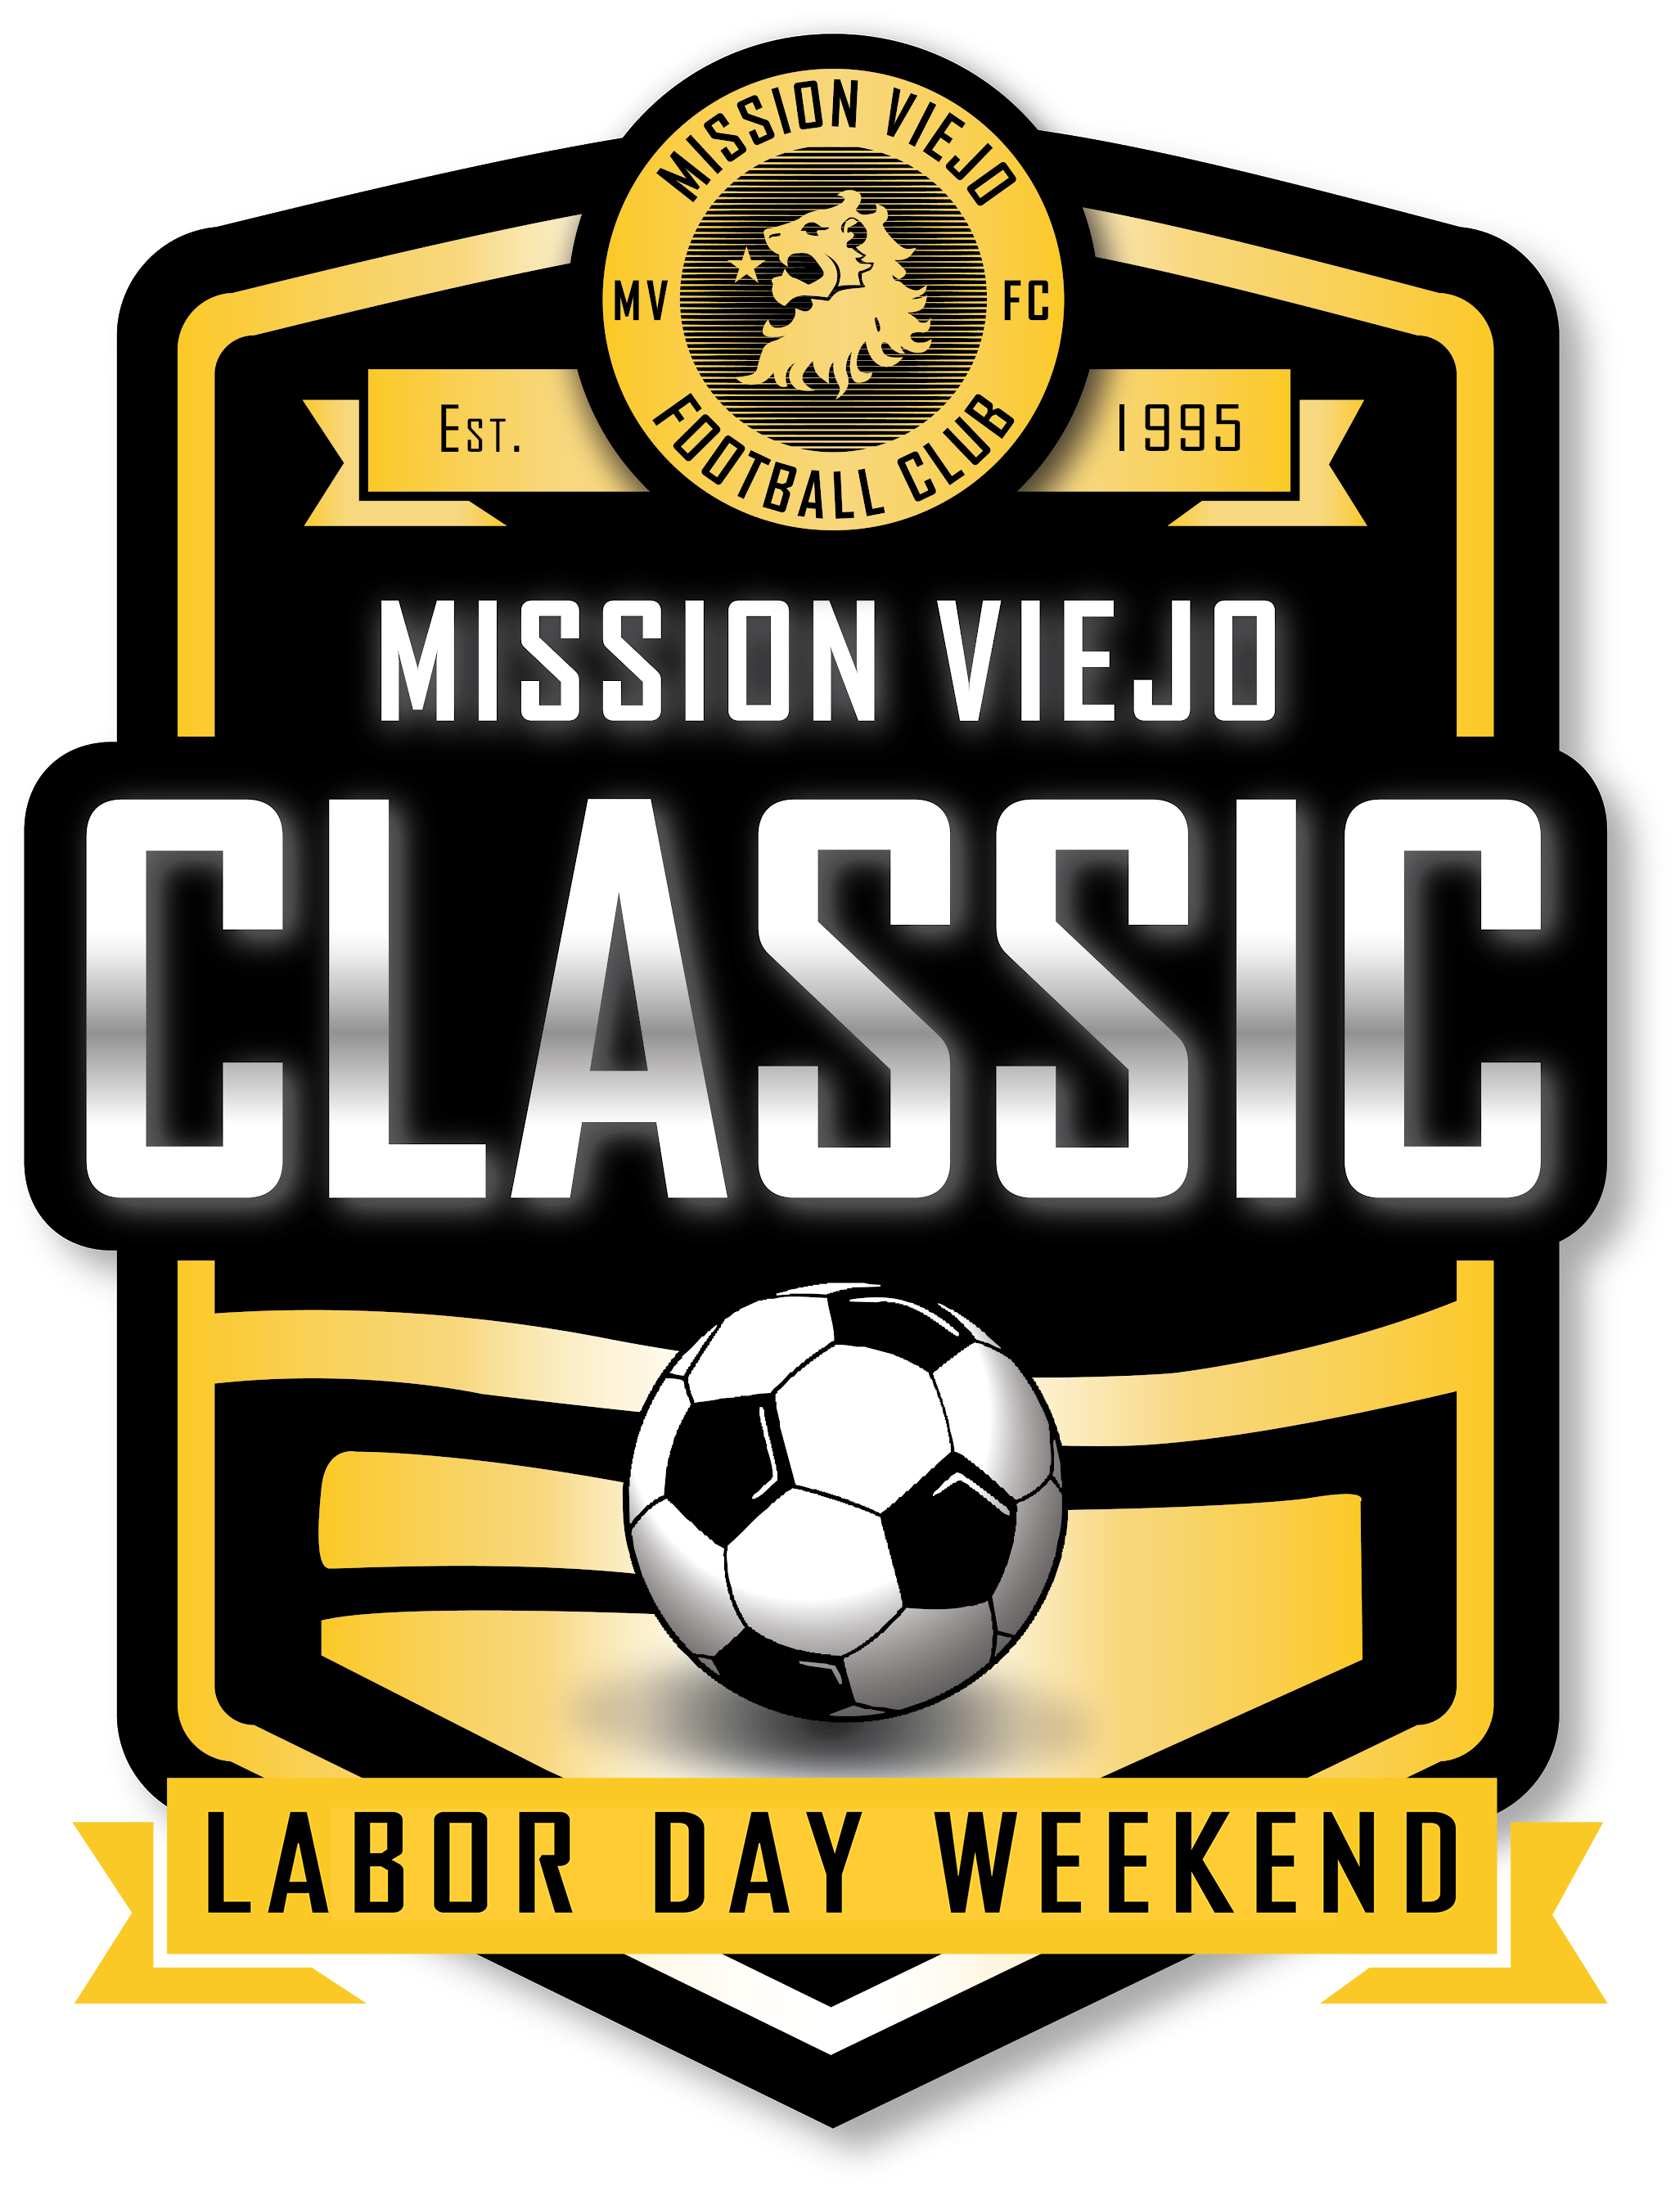 Mission Viejo Classic Tournament